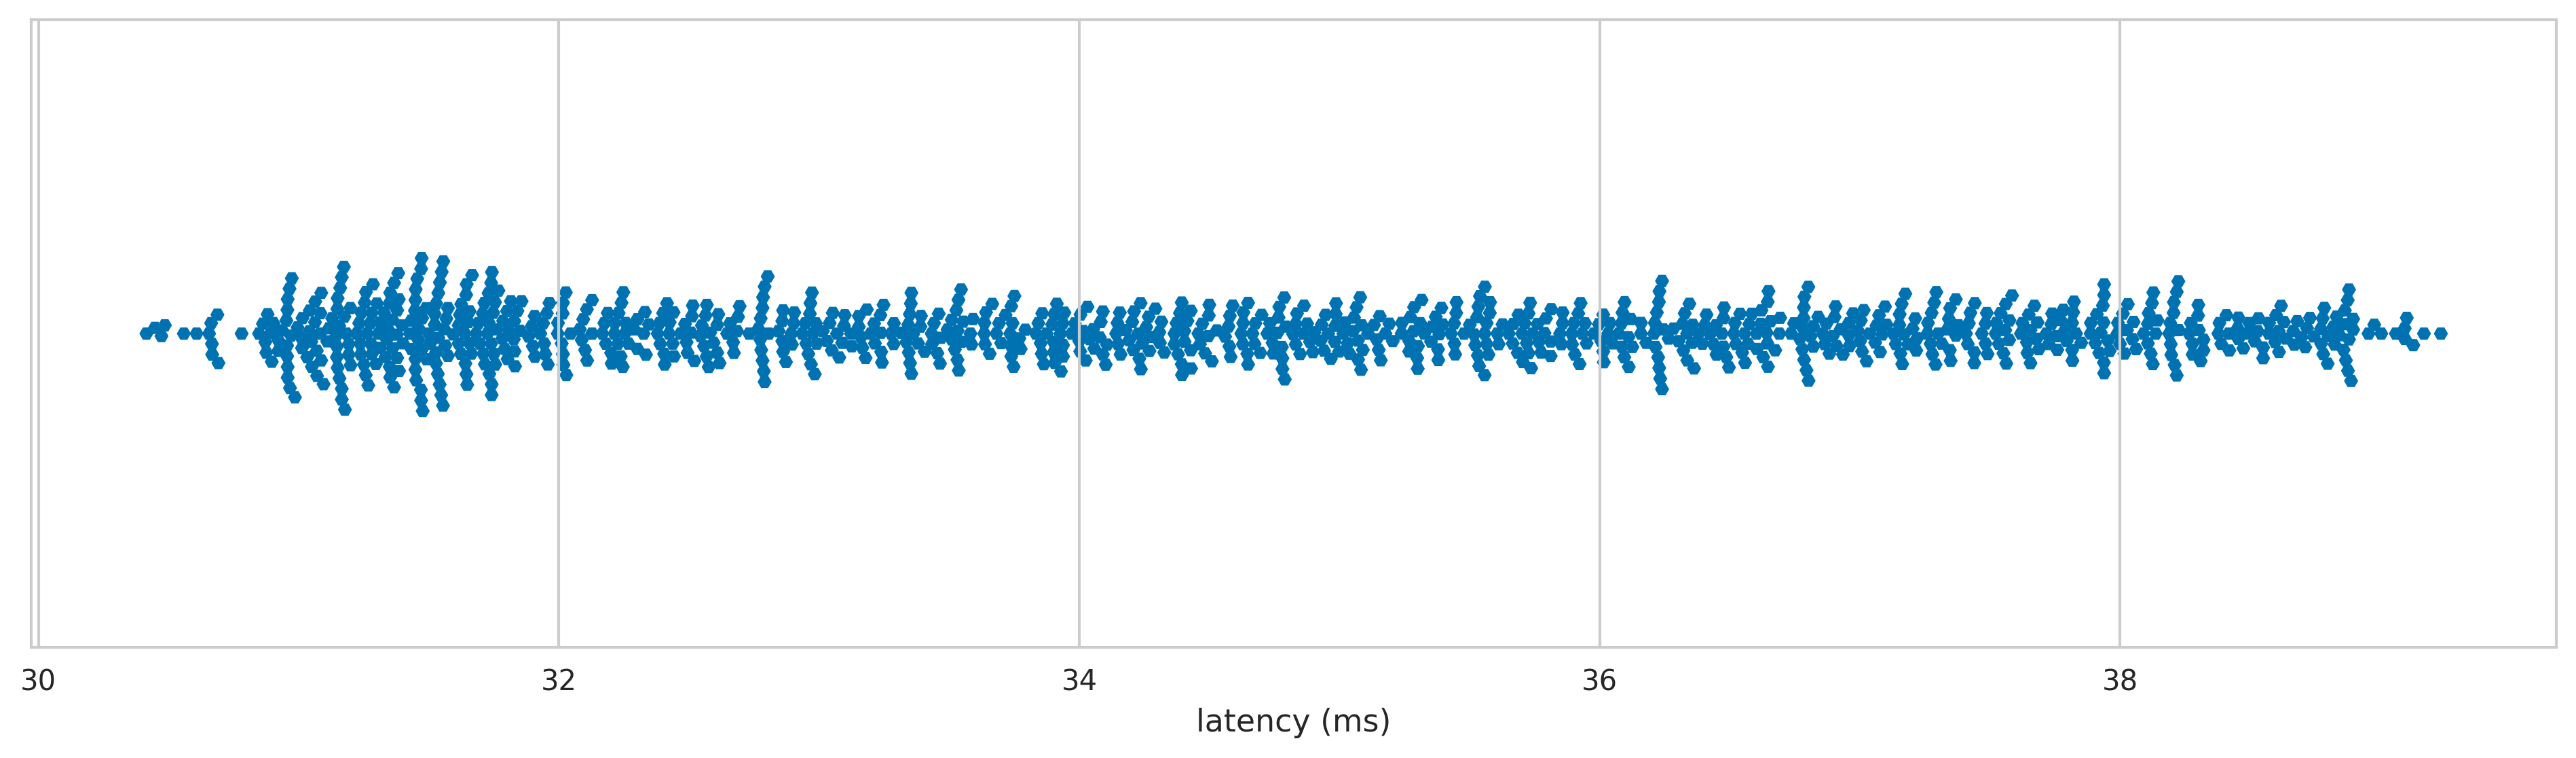 Apple A1152 latency distribution 